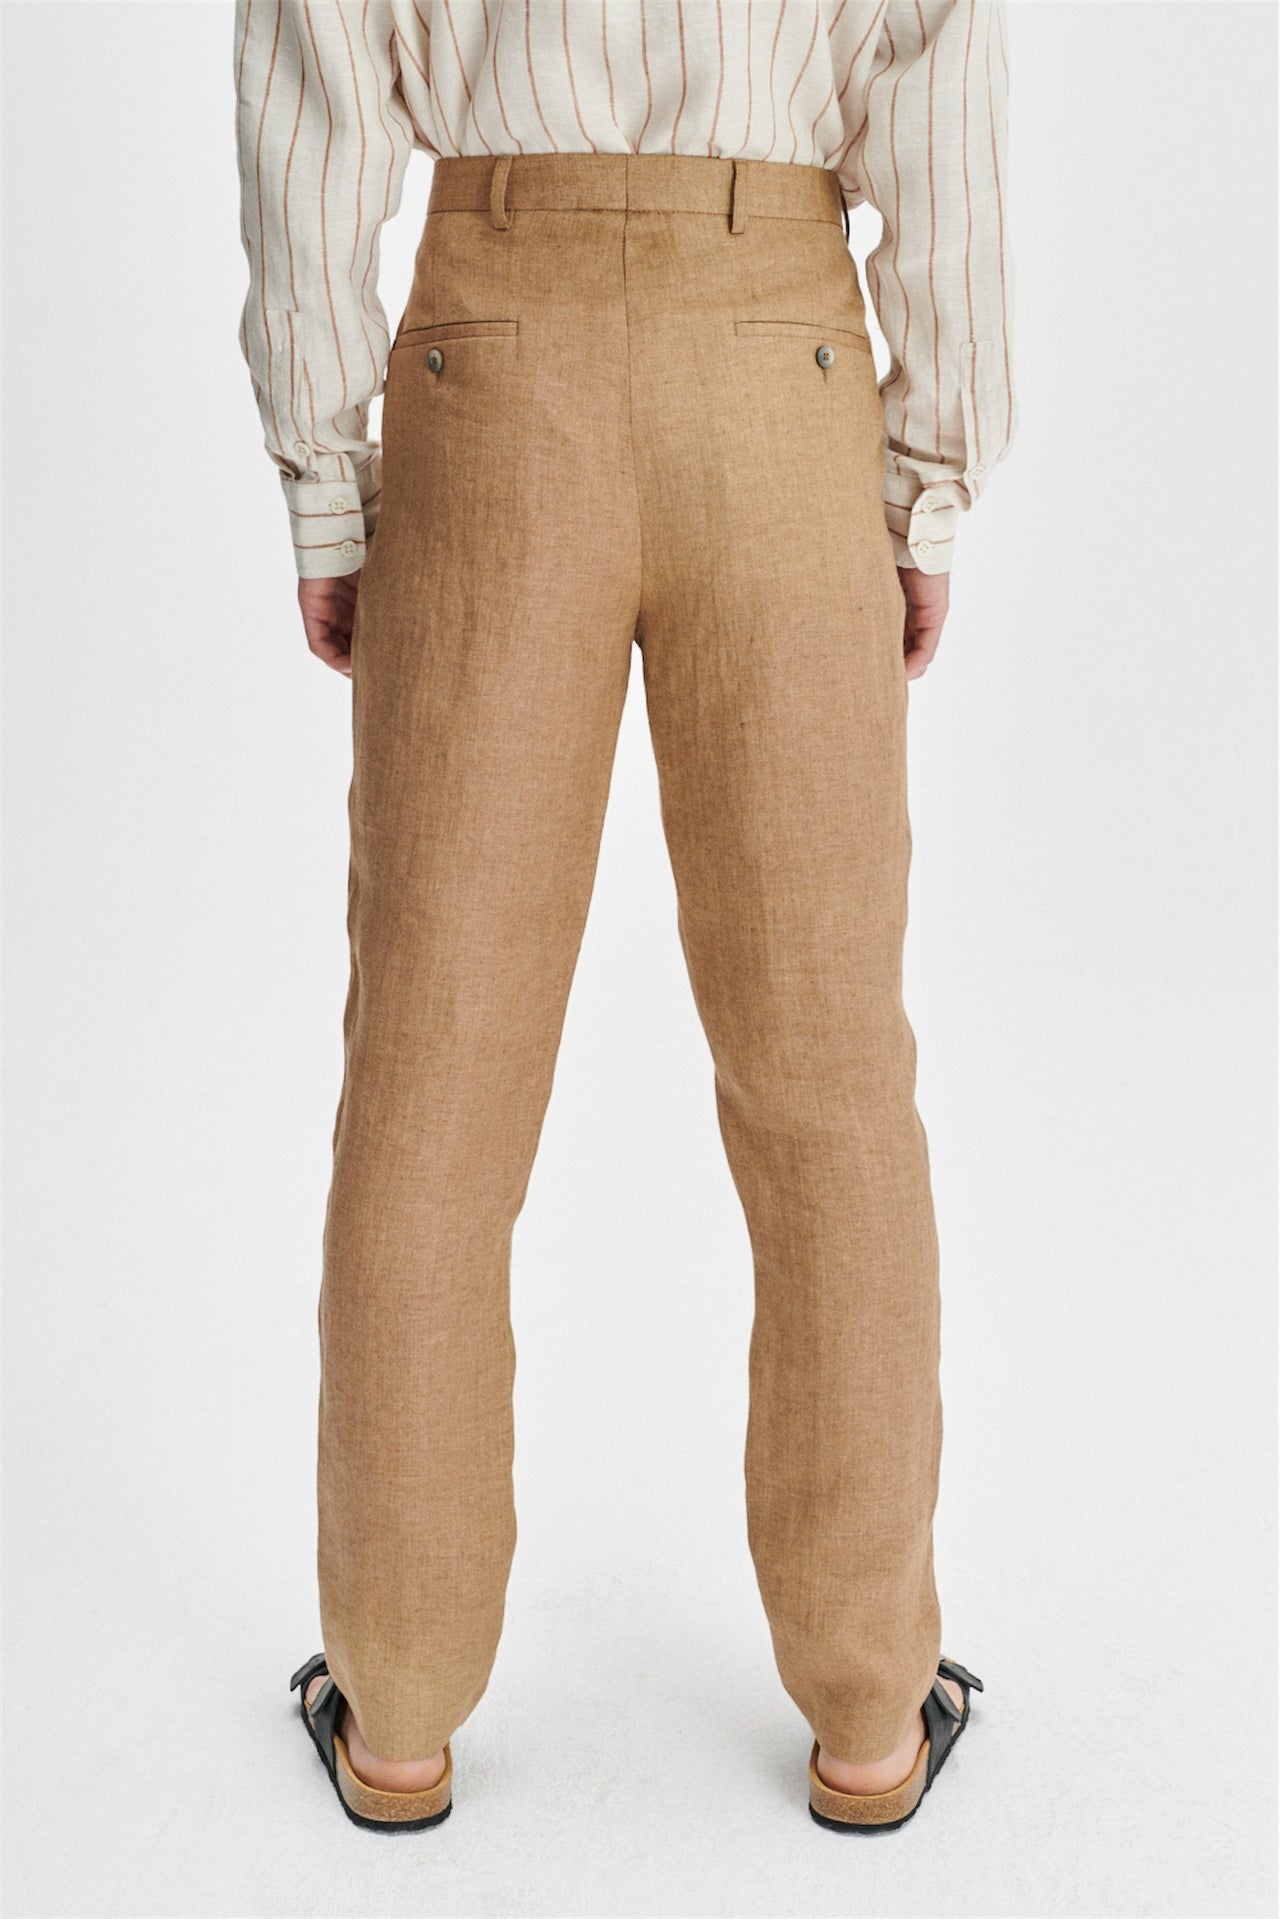 Bohemian Trousers in a Light Brown 100% Traceable Italian Linen by Albini